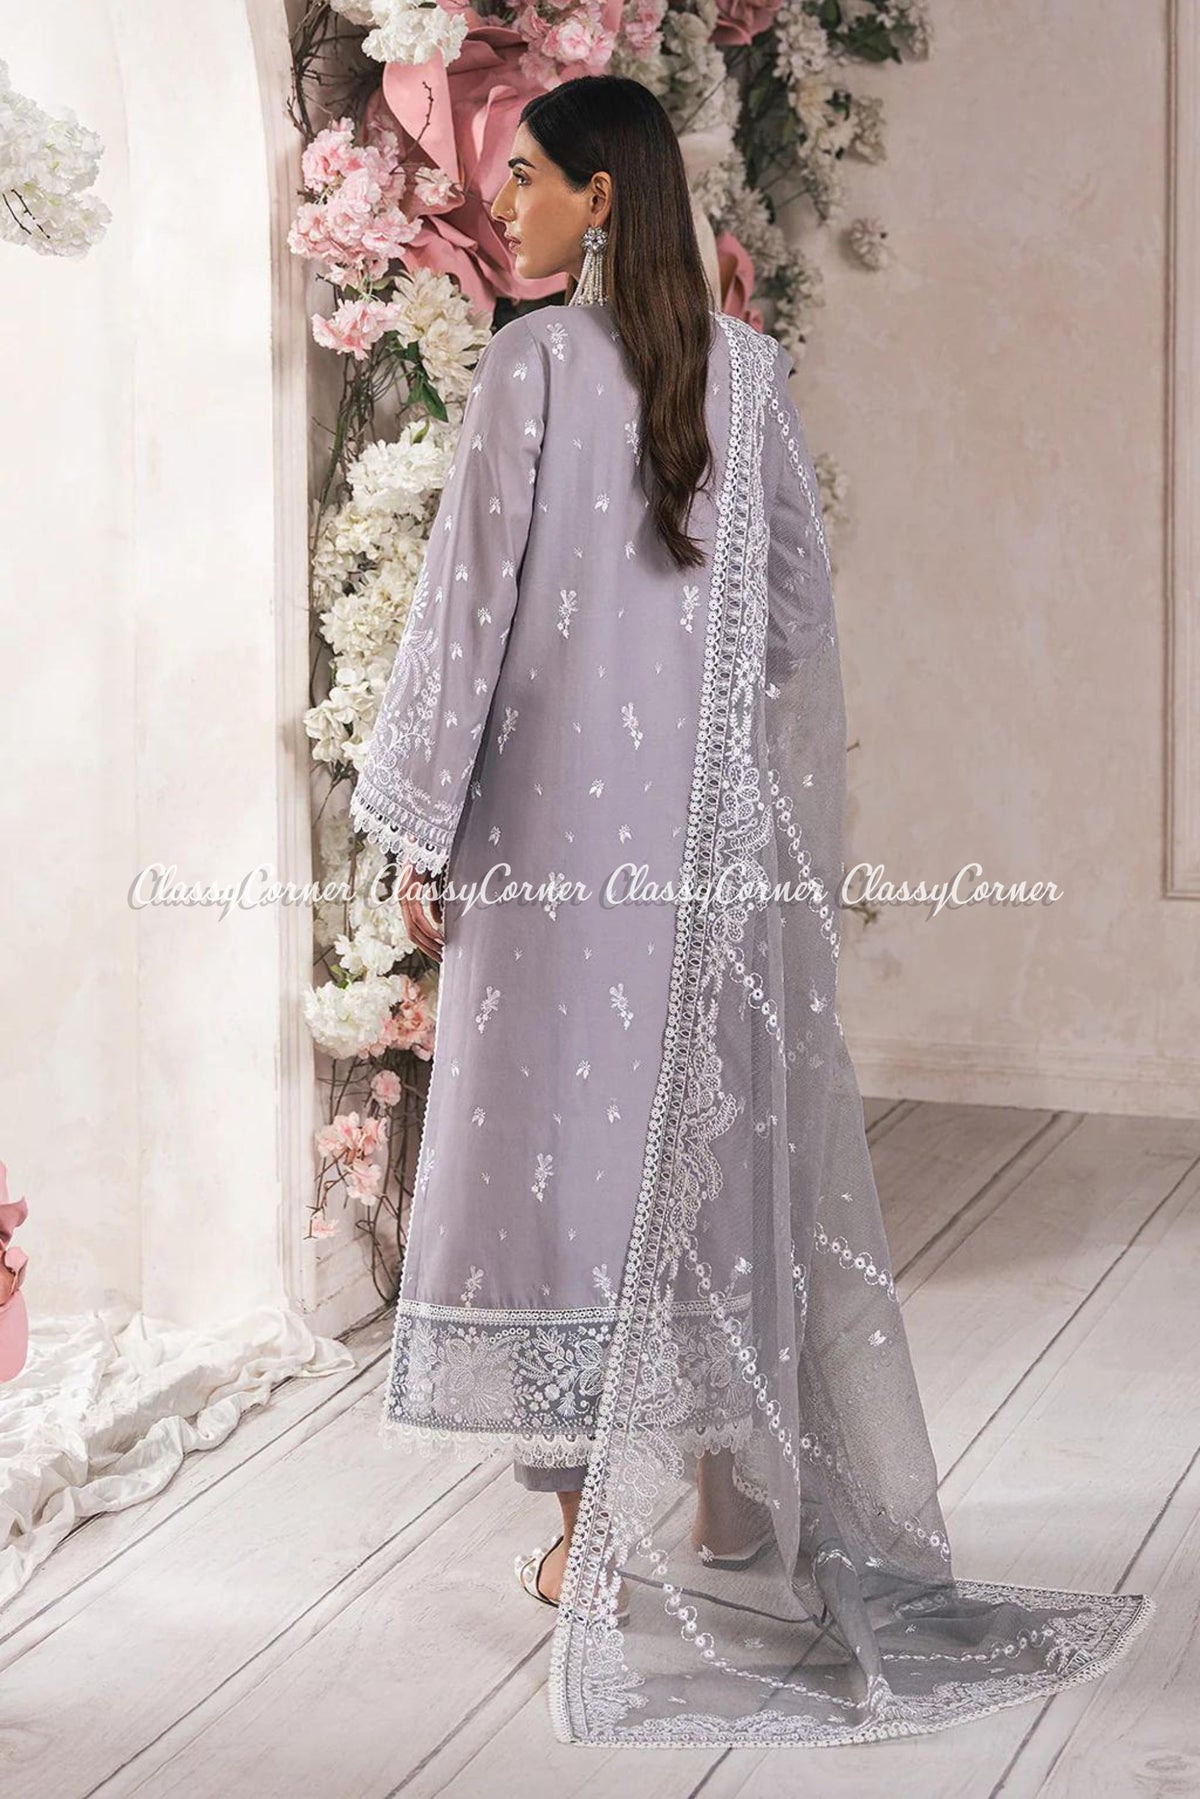 Pakistani wedding fashion trends